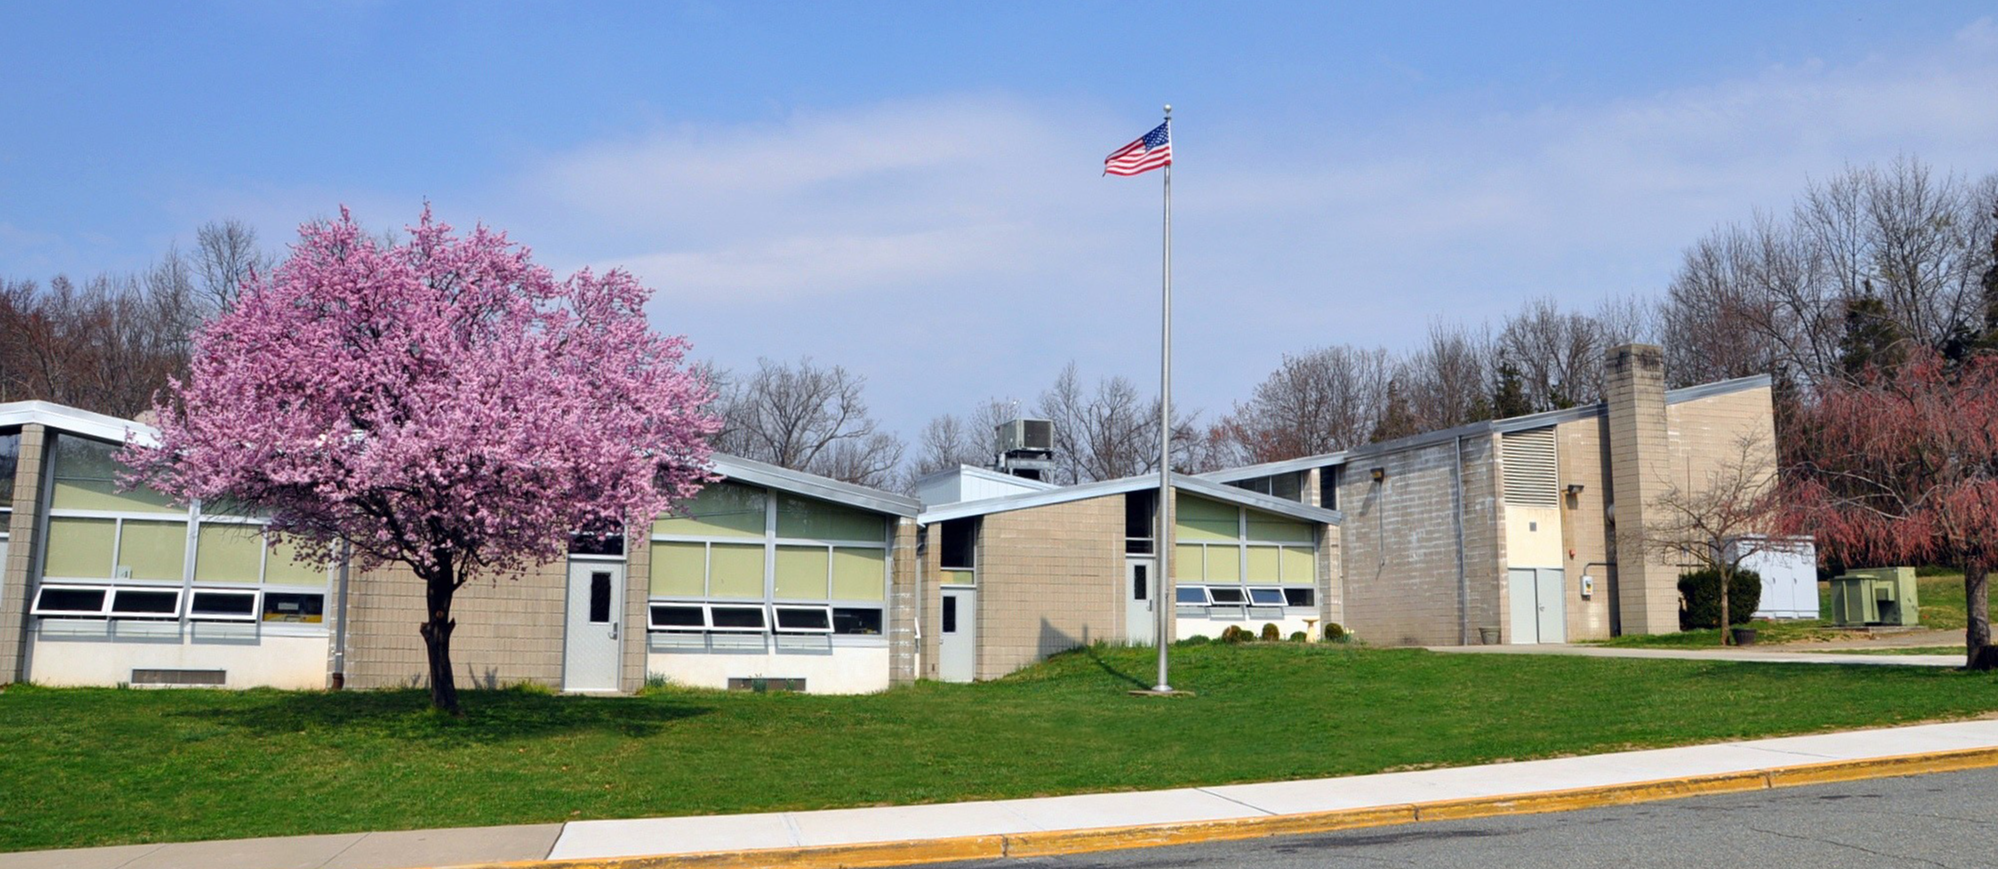 Hilldale Elementary School building